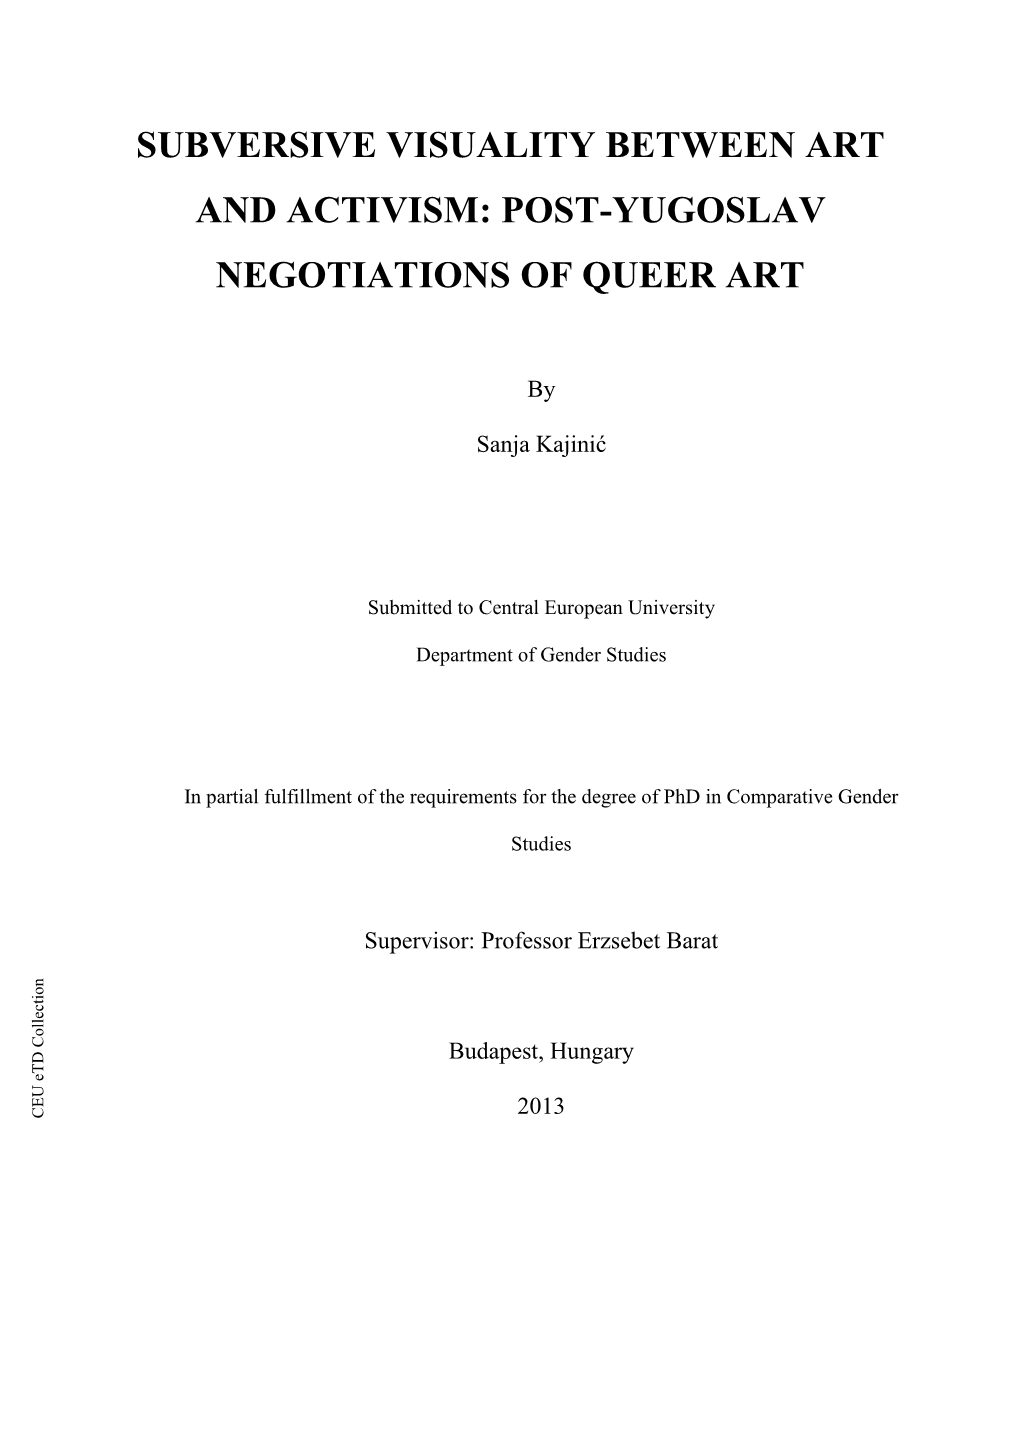 Post-Yugoslav Negotiations of Queer